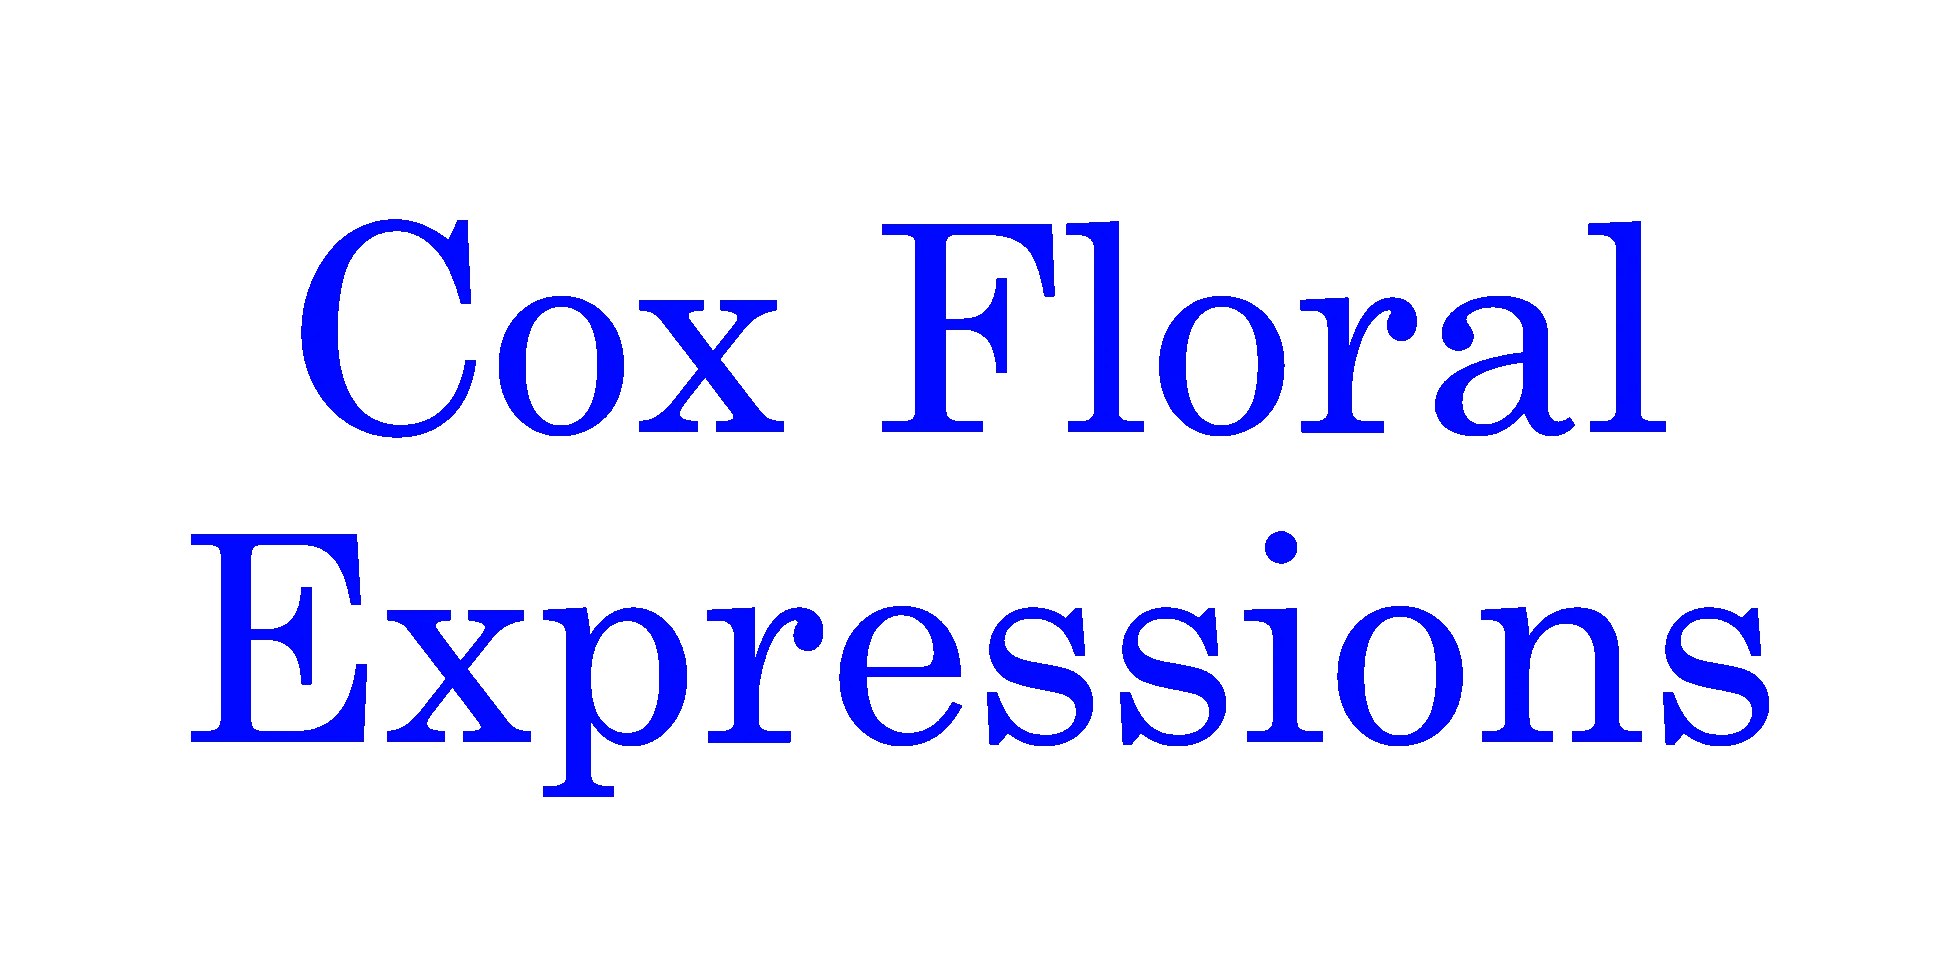 Cox Floral Expressions